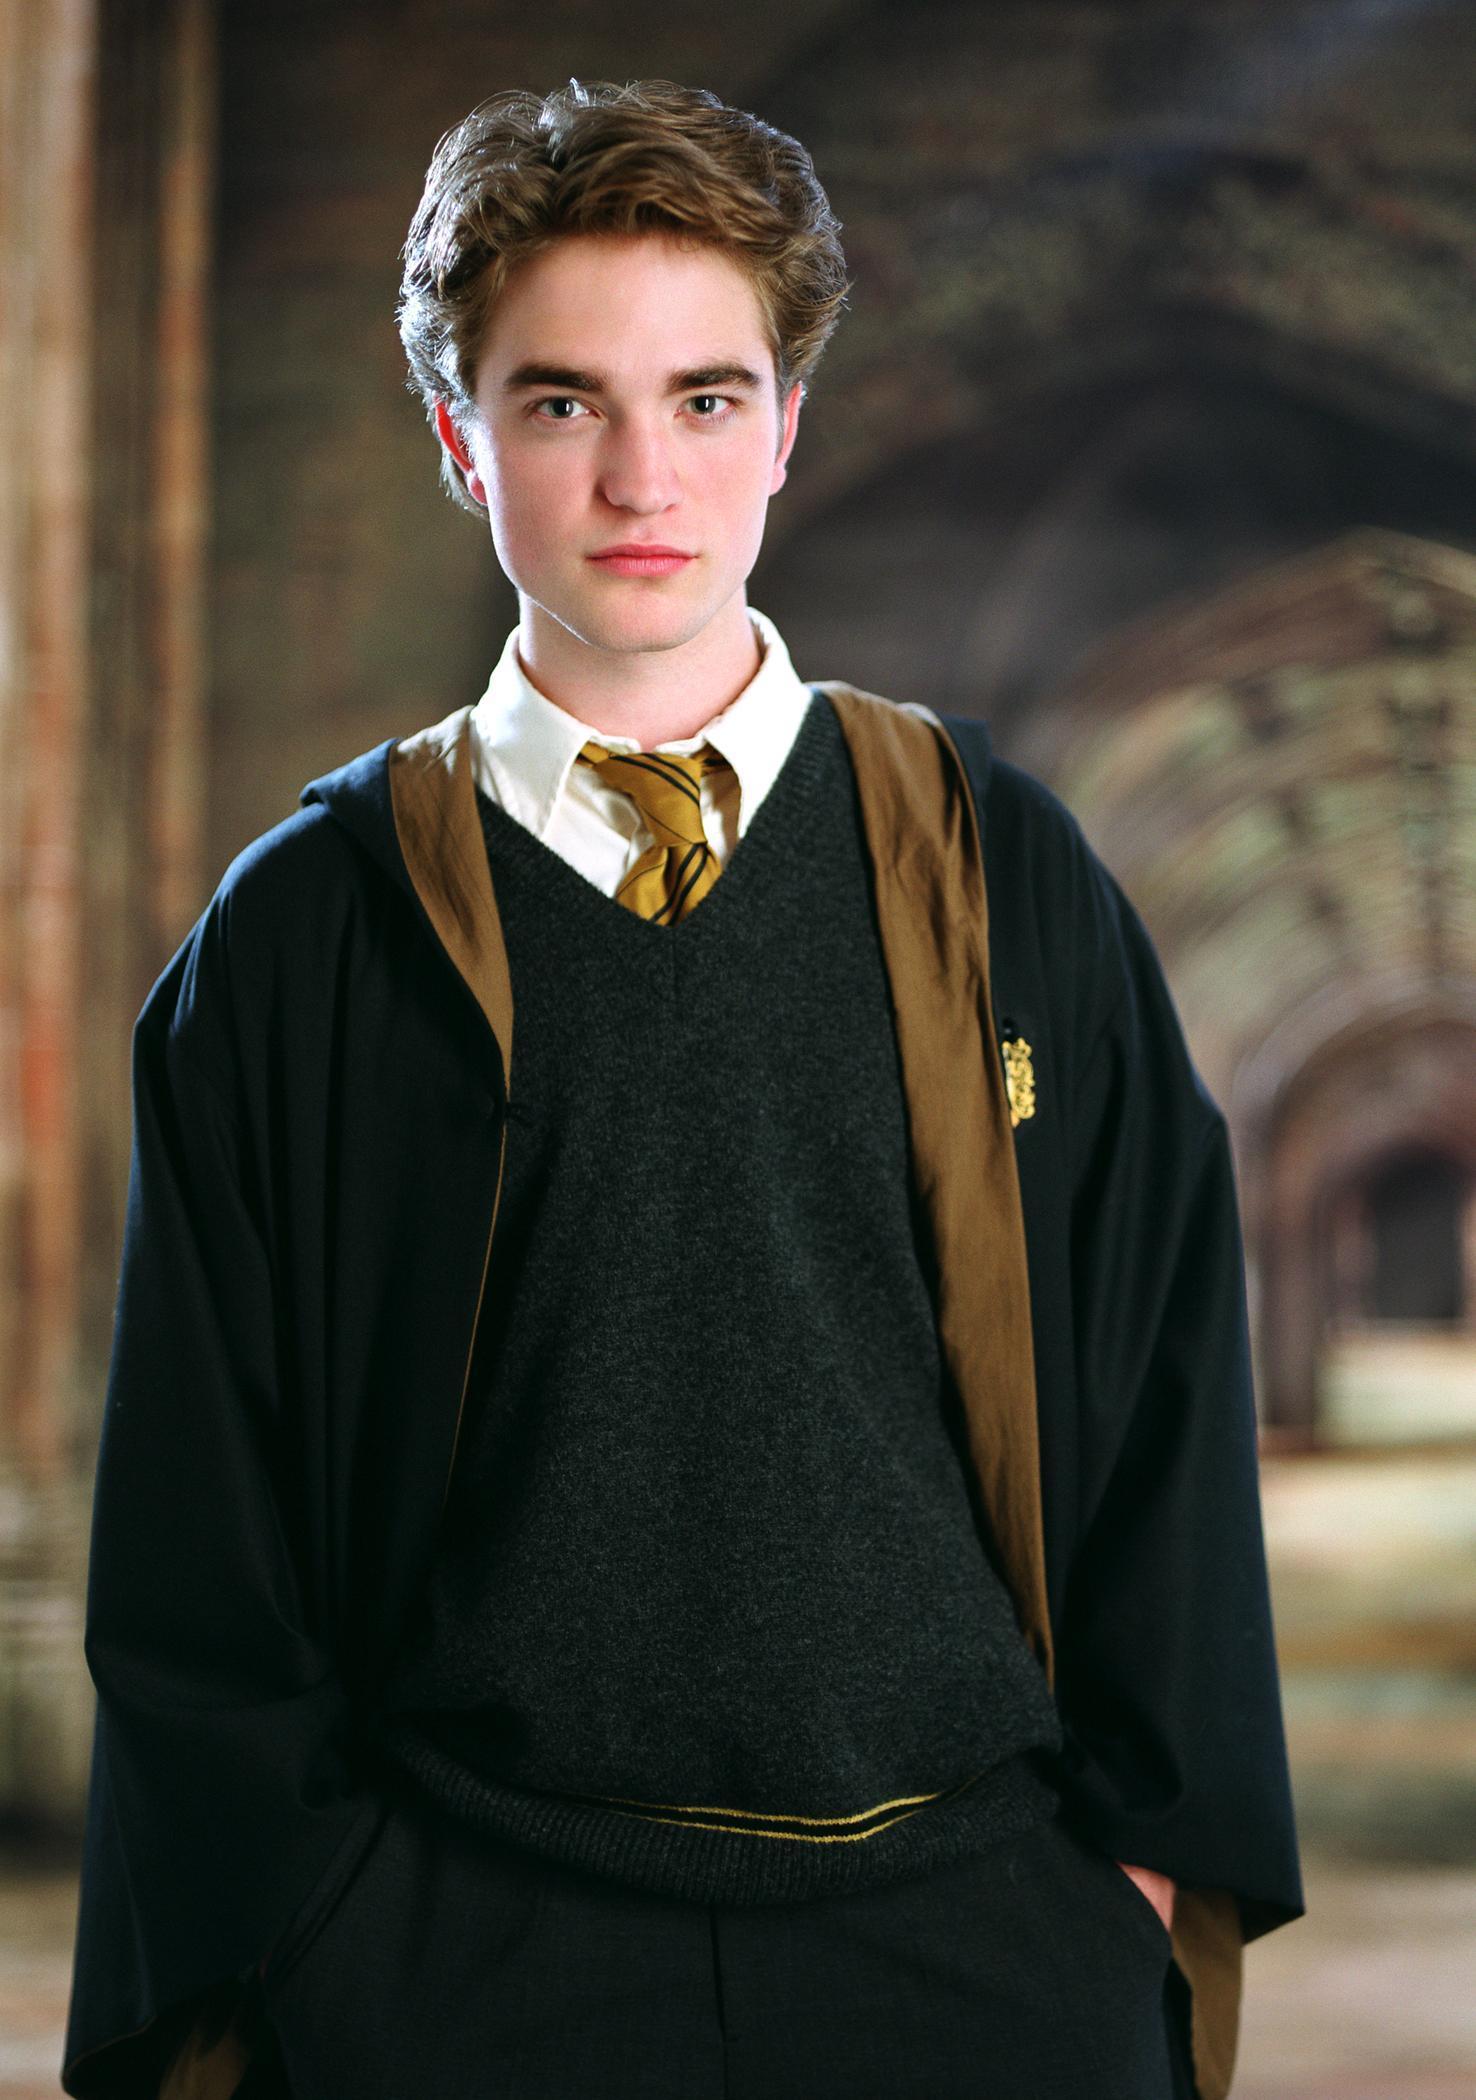 Harry Potter e o Cálice de Fogo (filme), Harry Potter Wiki